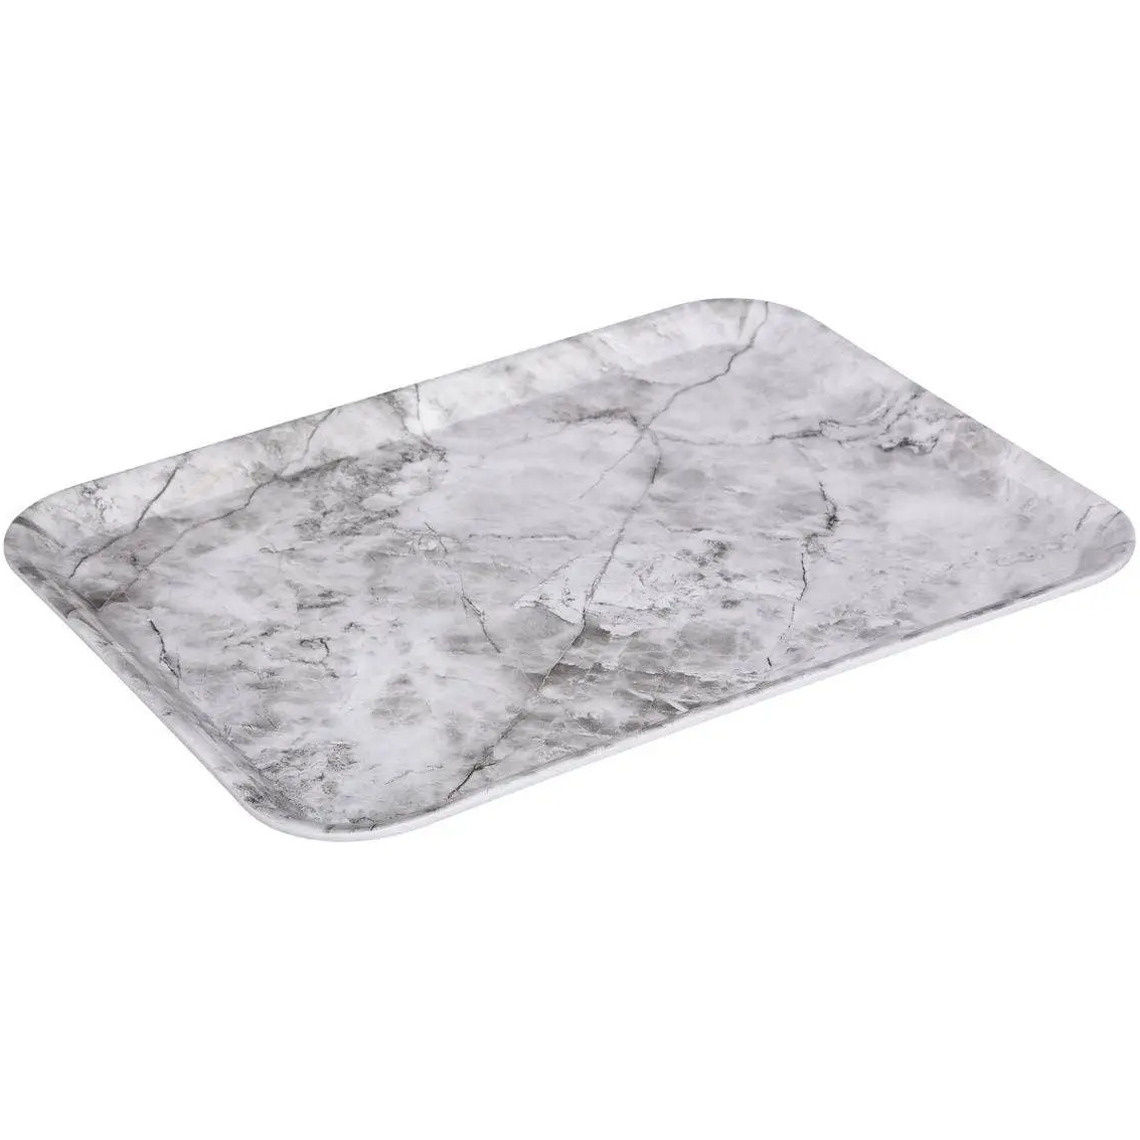 5five Dienblad/serveer tray Marble - Melamine - creme wit - 33 x 43 cm - rechthoek -